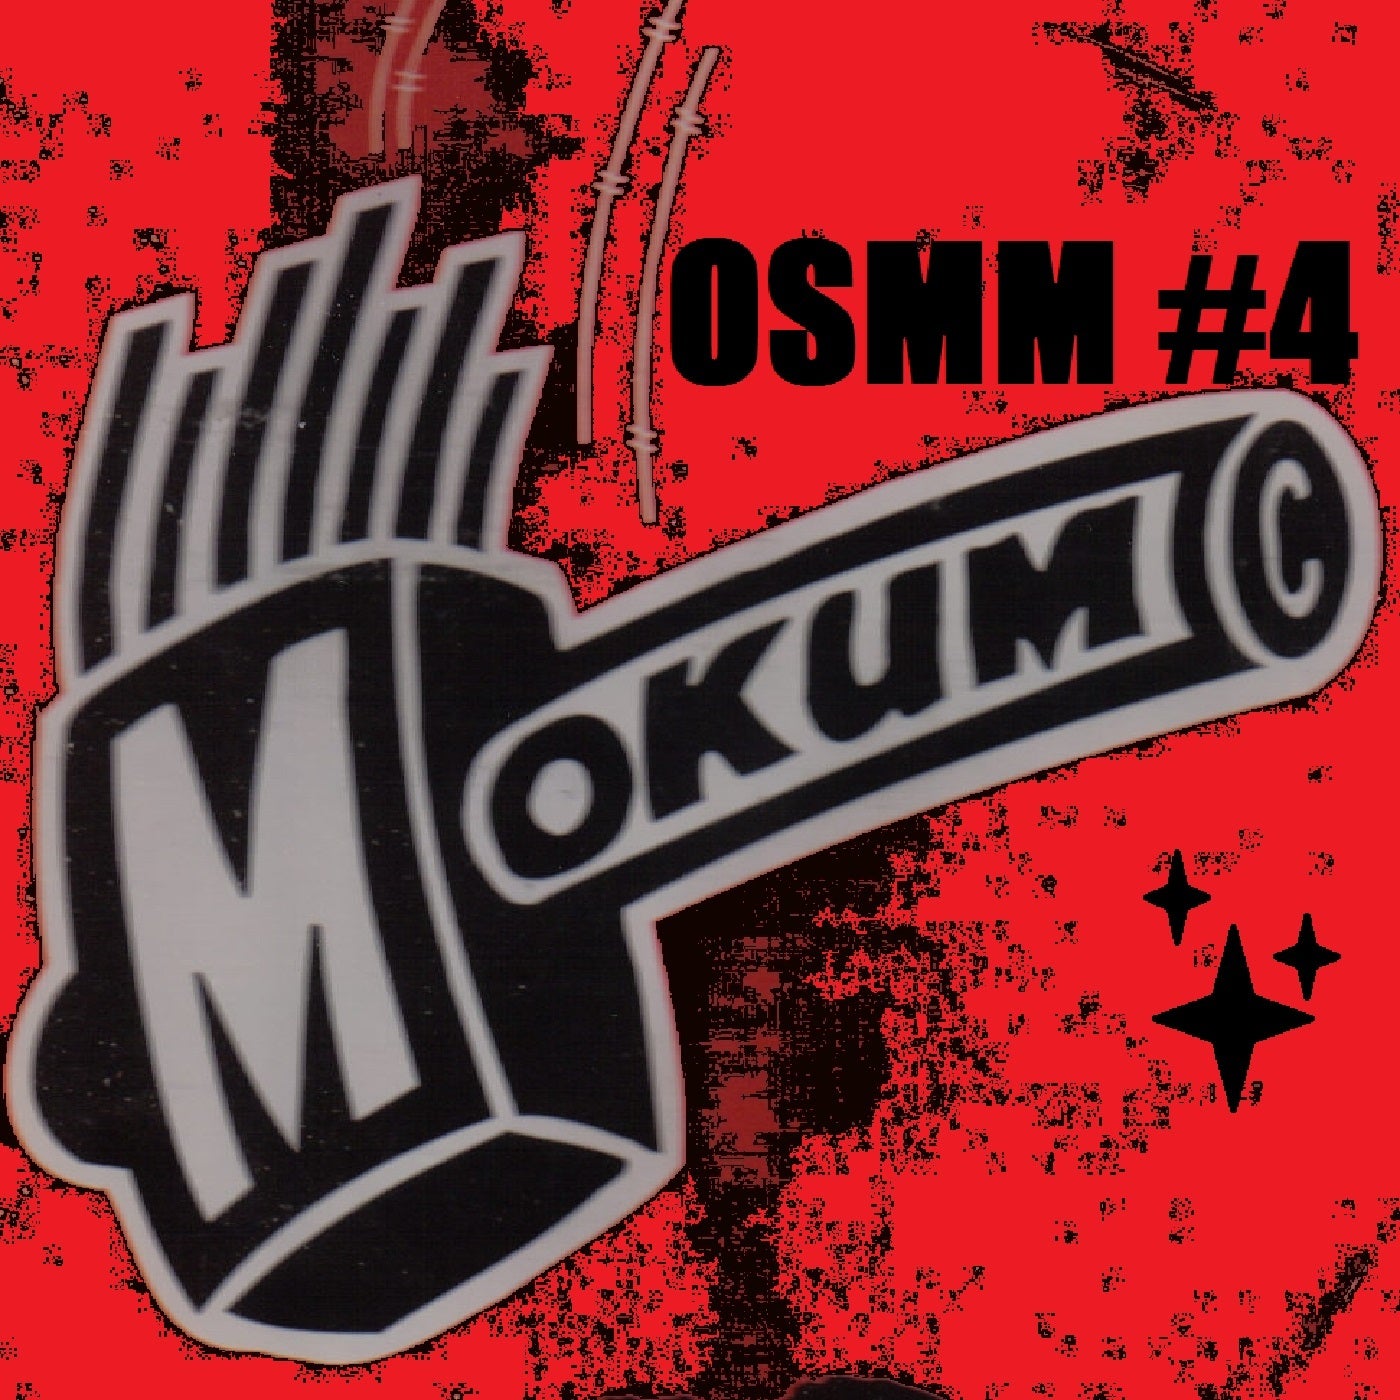 Old School Mokum Monsters Vol 4